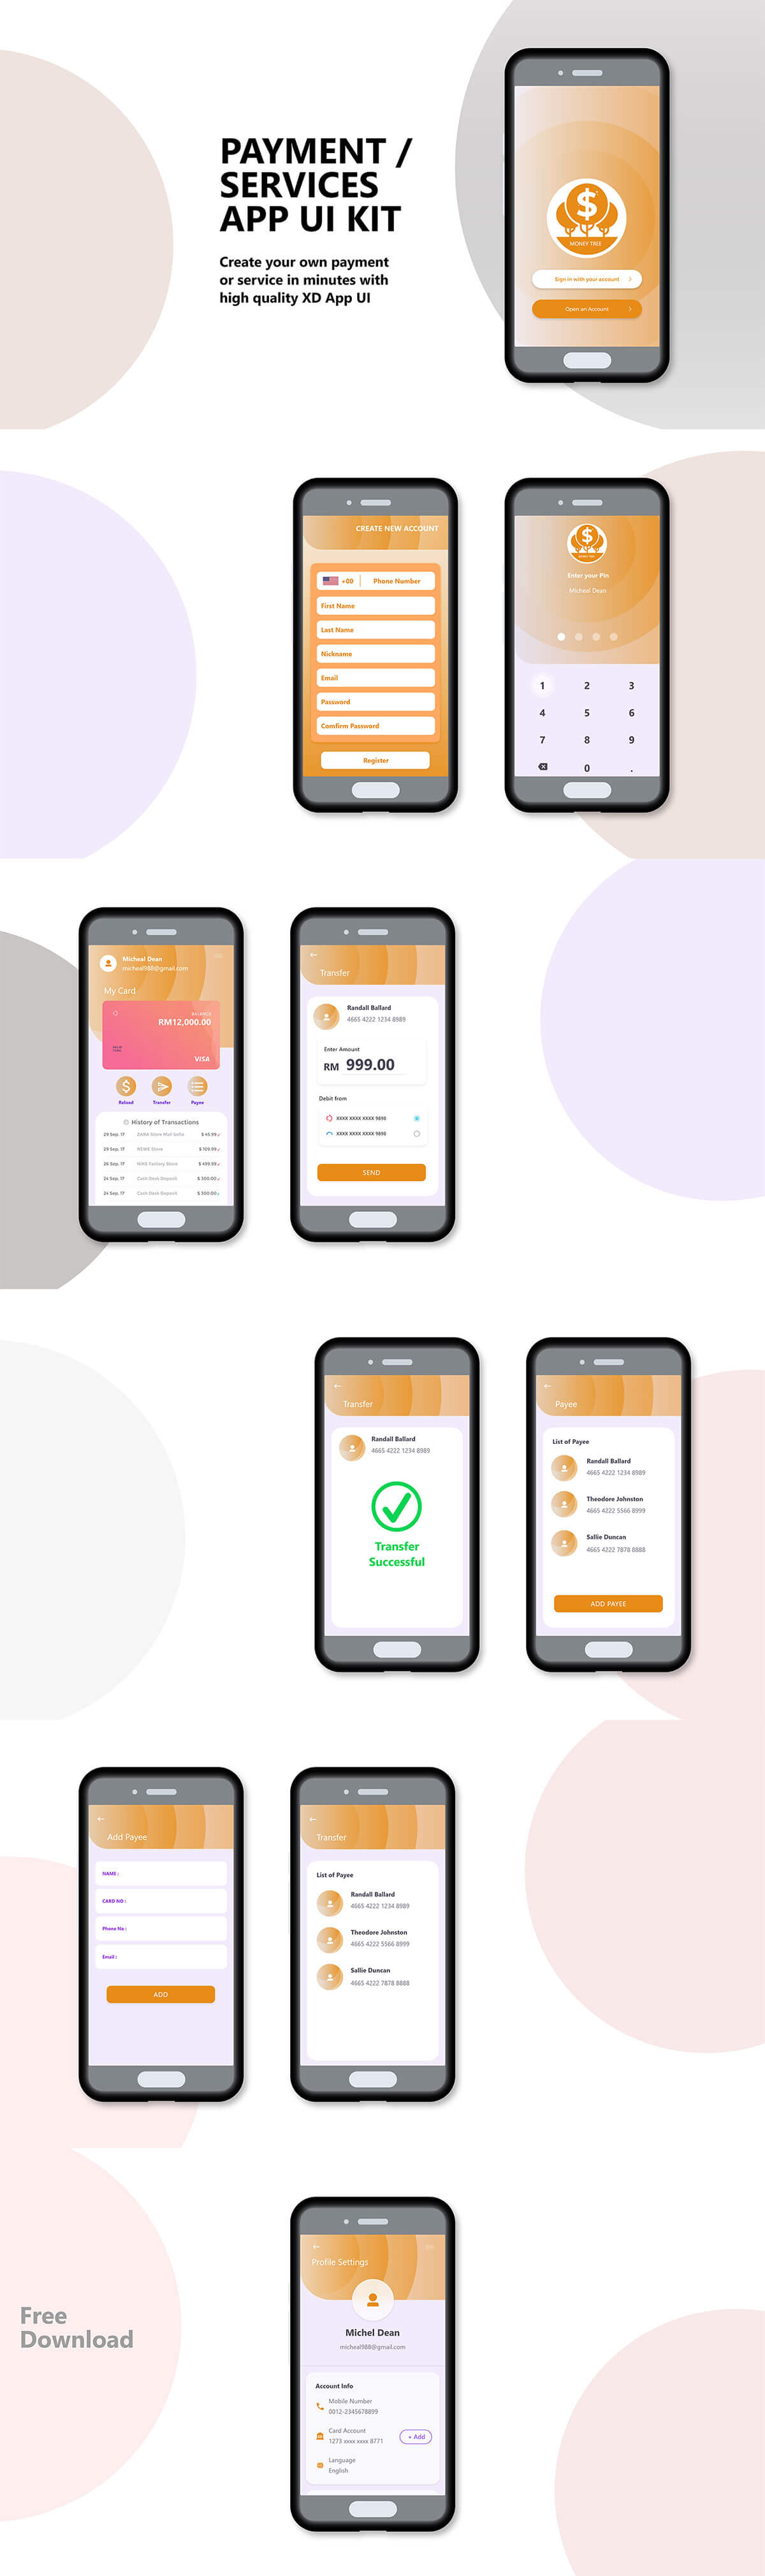 Free Payment Services App UI Kit